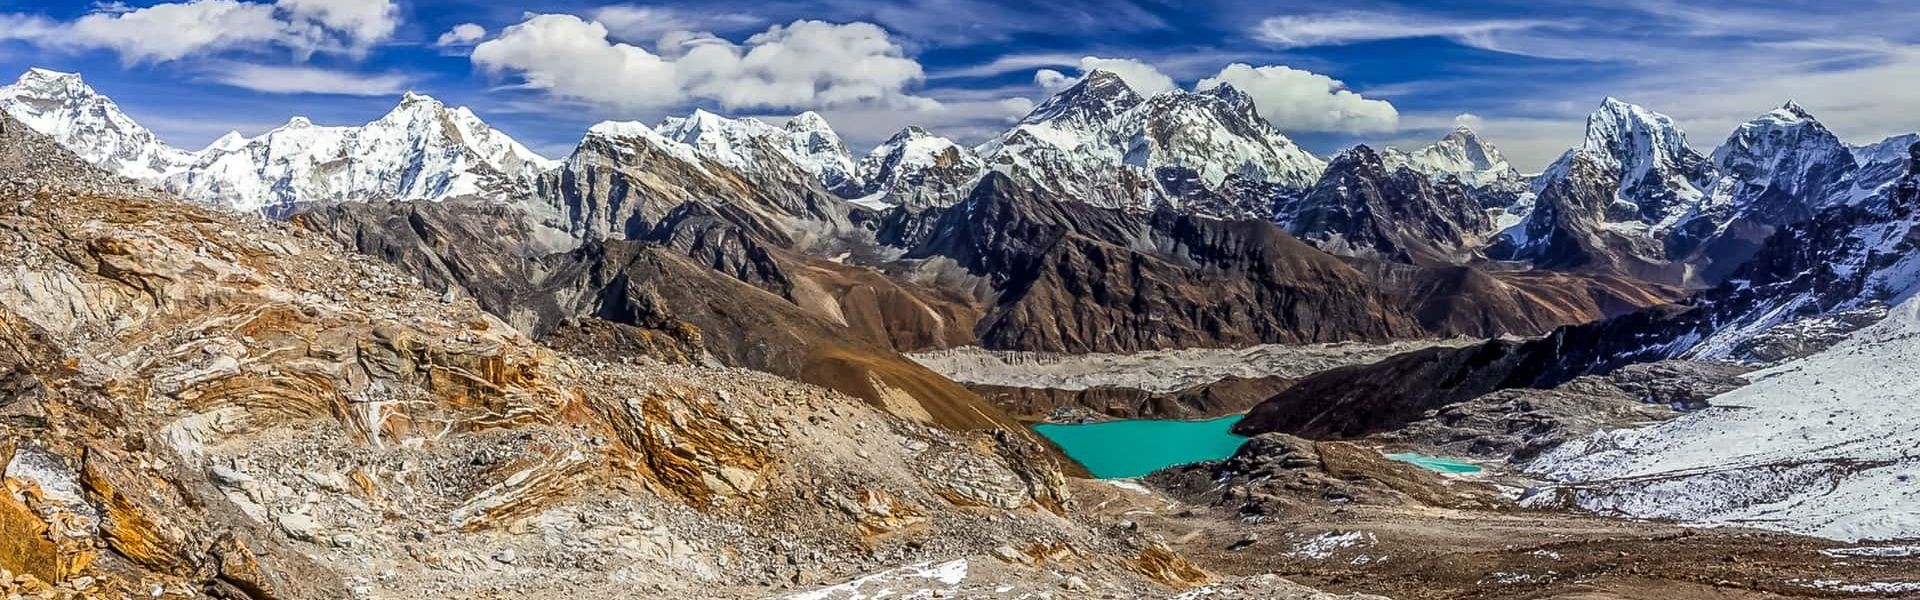 Challenges of the Everest Three Passes Trek